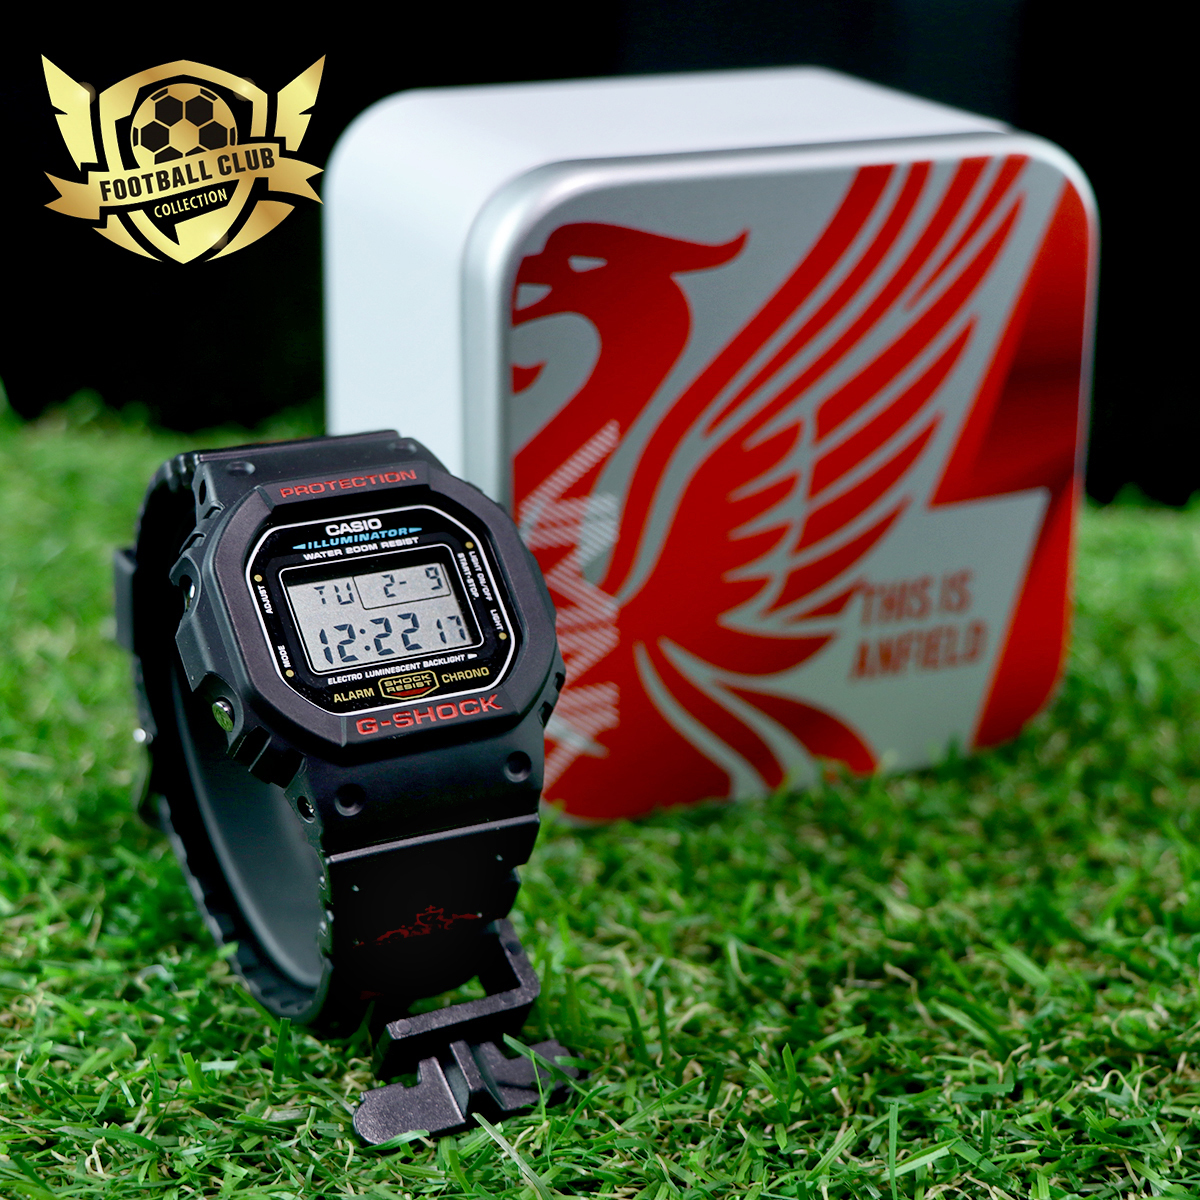 Liverpool (Premier League) Football Club DW-5600 G-Shock Watch 